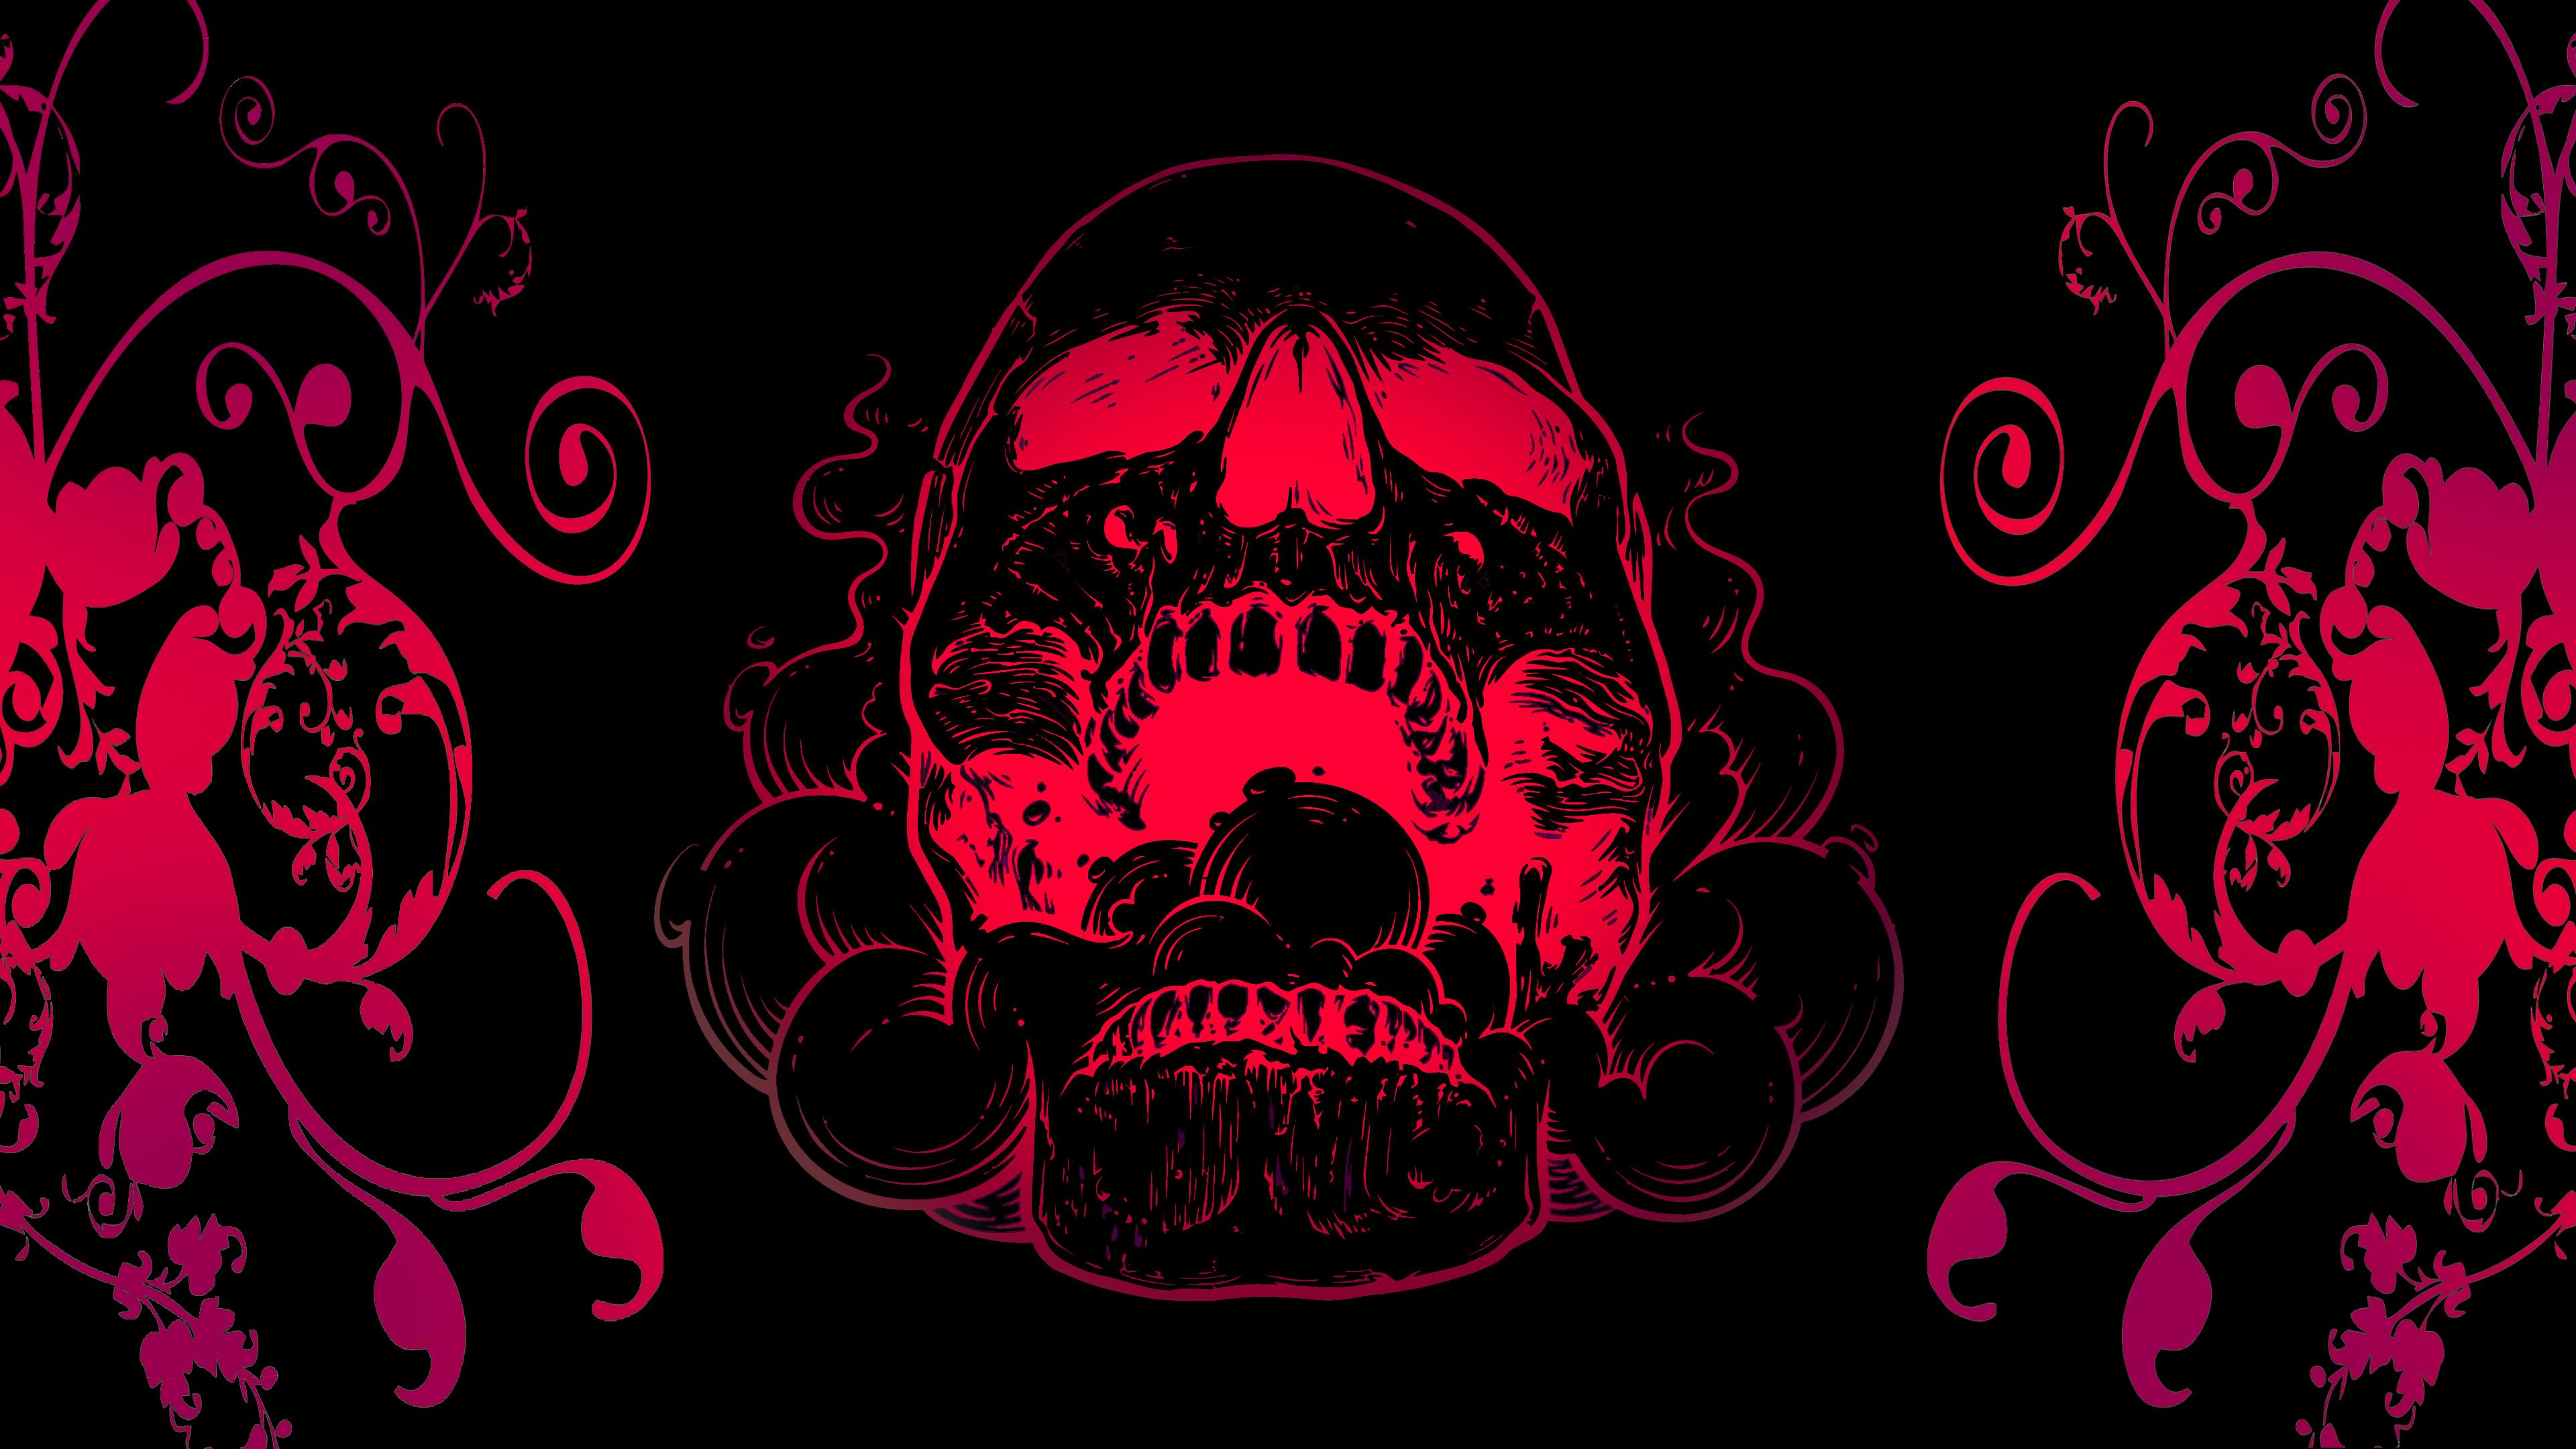 Wallpaper graphics, graphic design, bone, illustration, design. Skull wallpaper, Black skulls wallpaper, Pink skull wallpaper